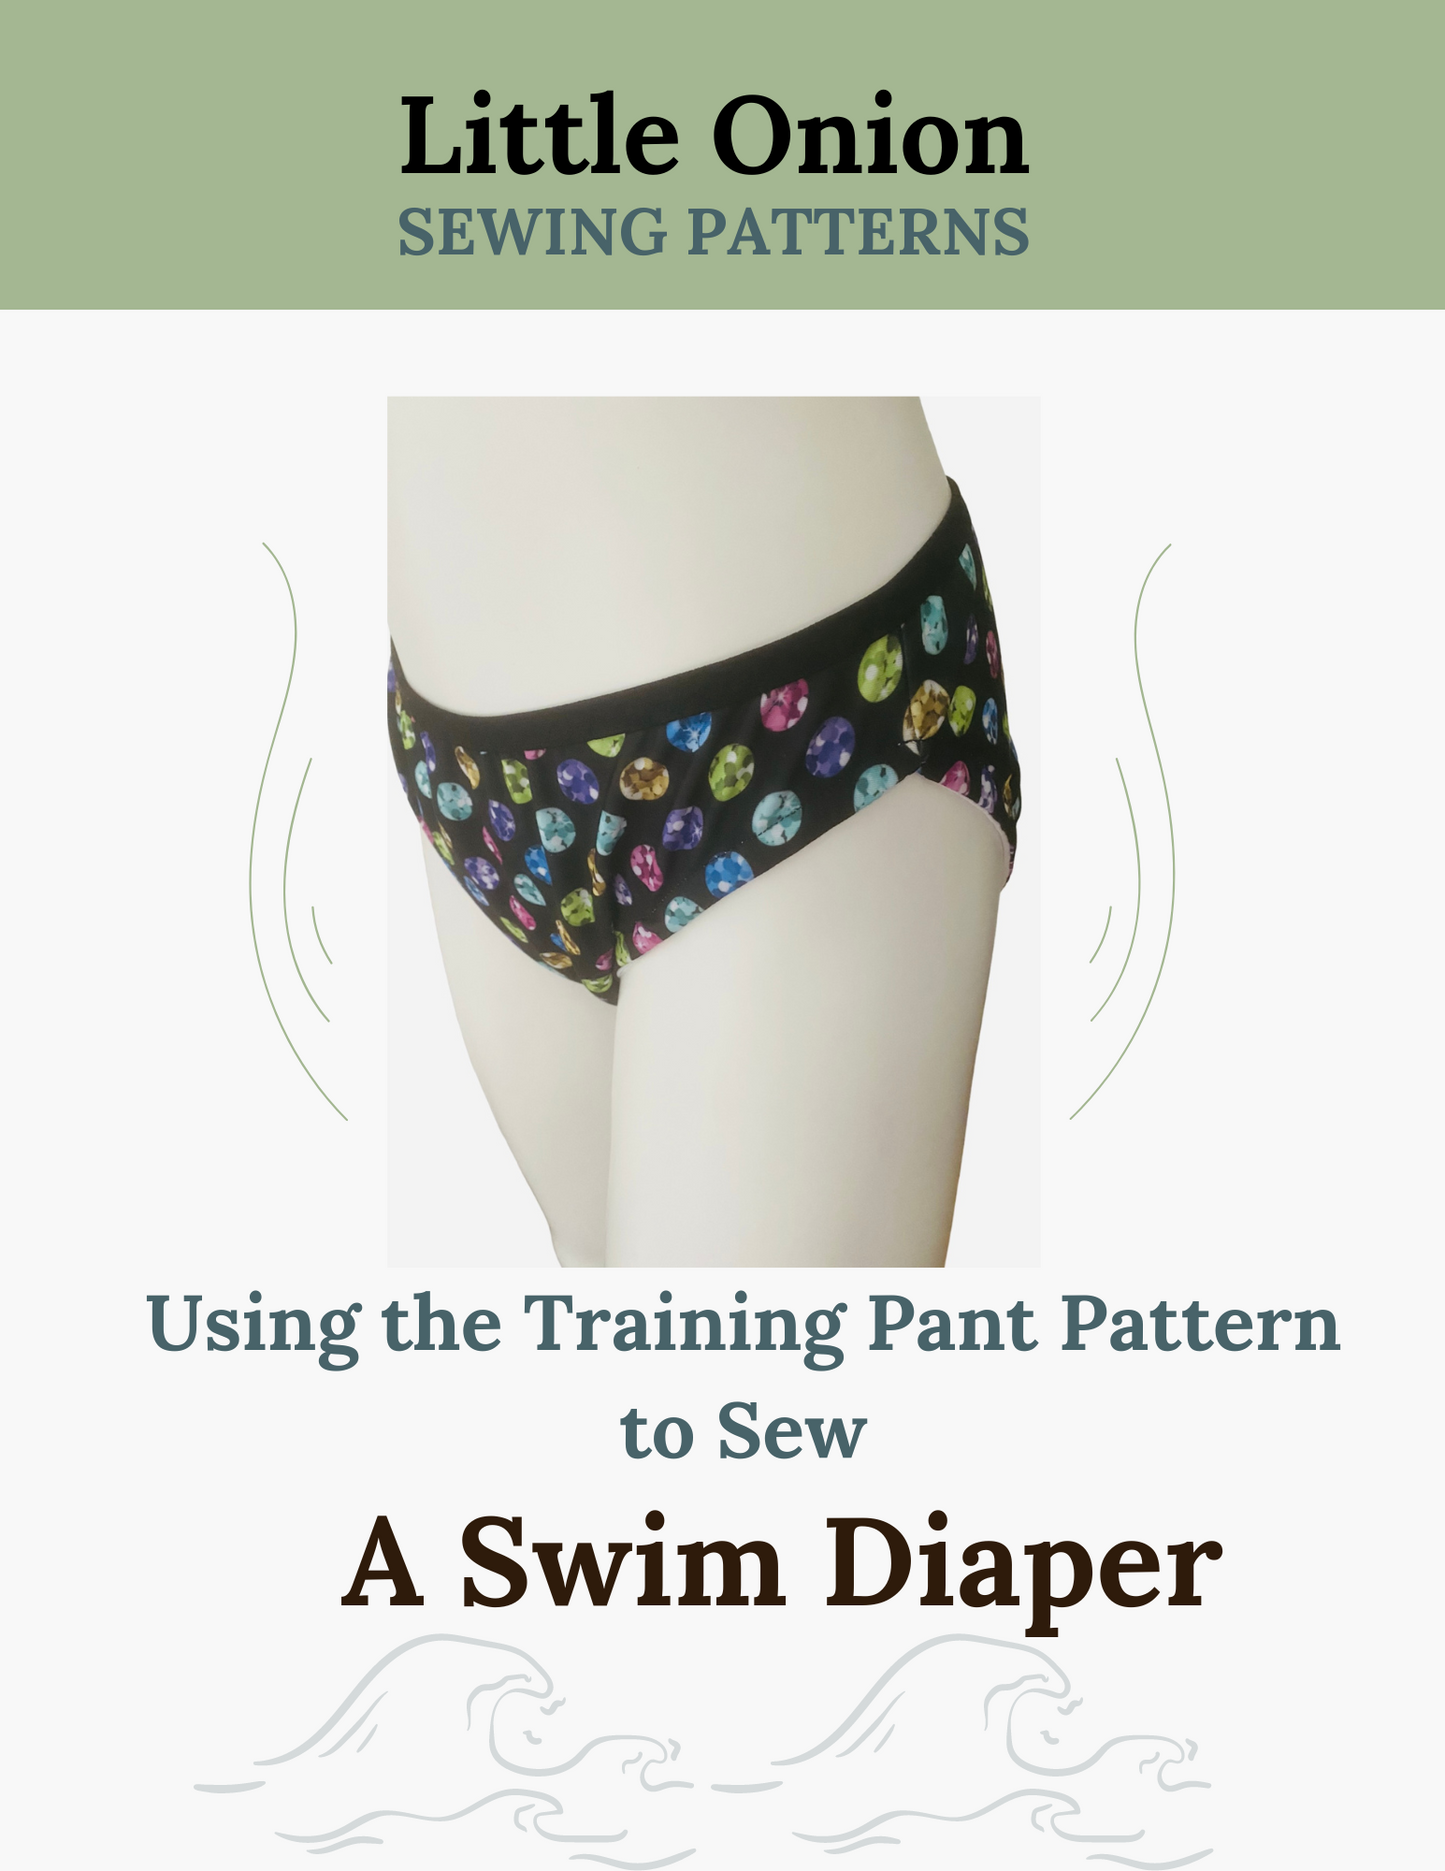 Swim Diaper Guide for Training Pant Pattern